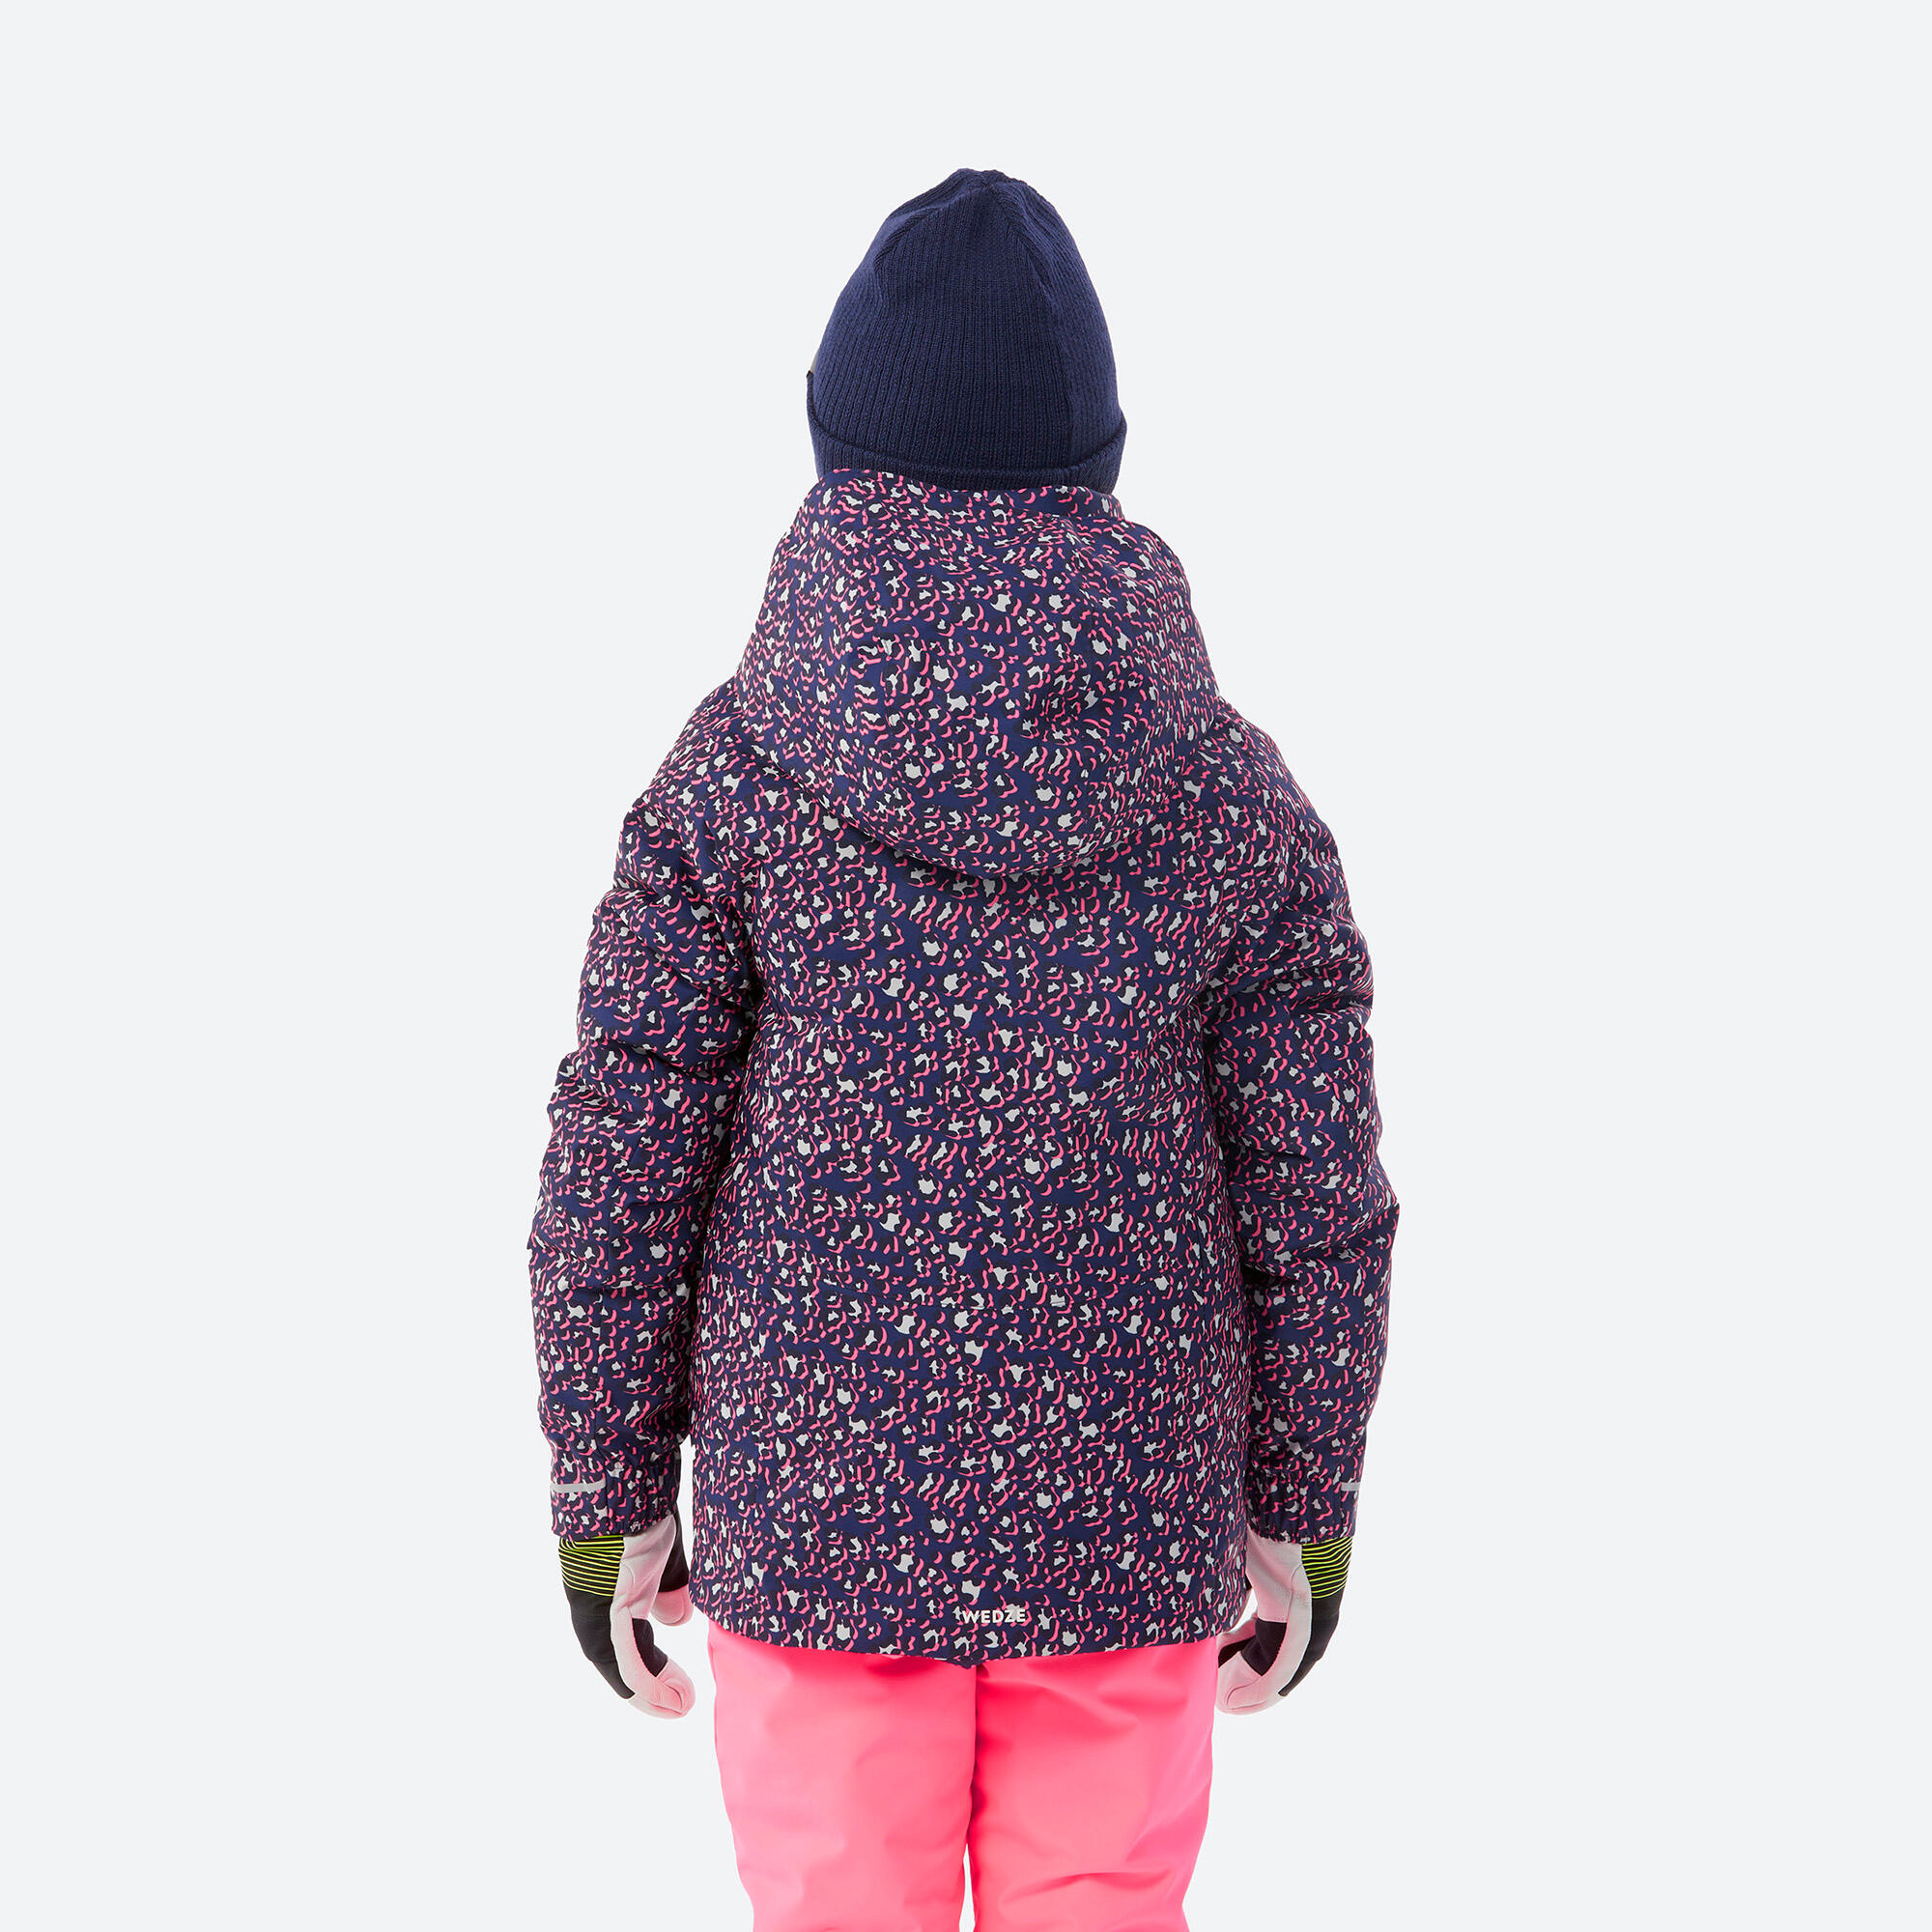 Kids’ Warm and Waterproof Ski Jacket 500 - Leopard Print 4/10